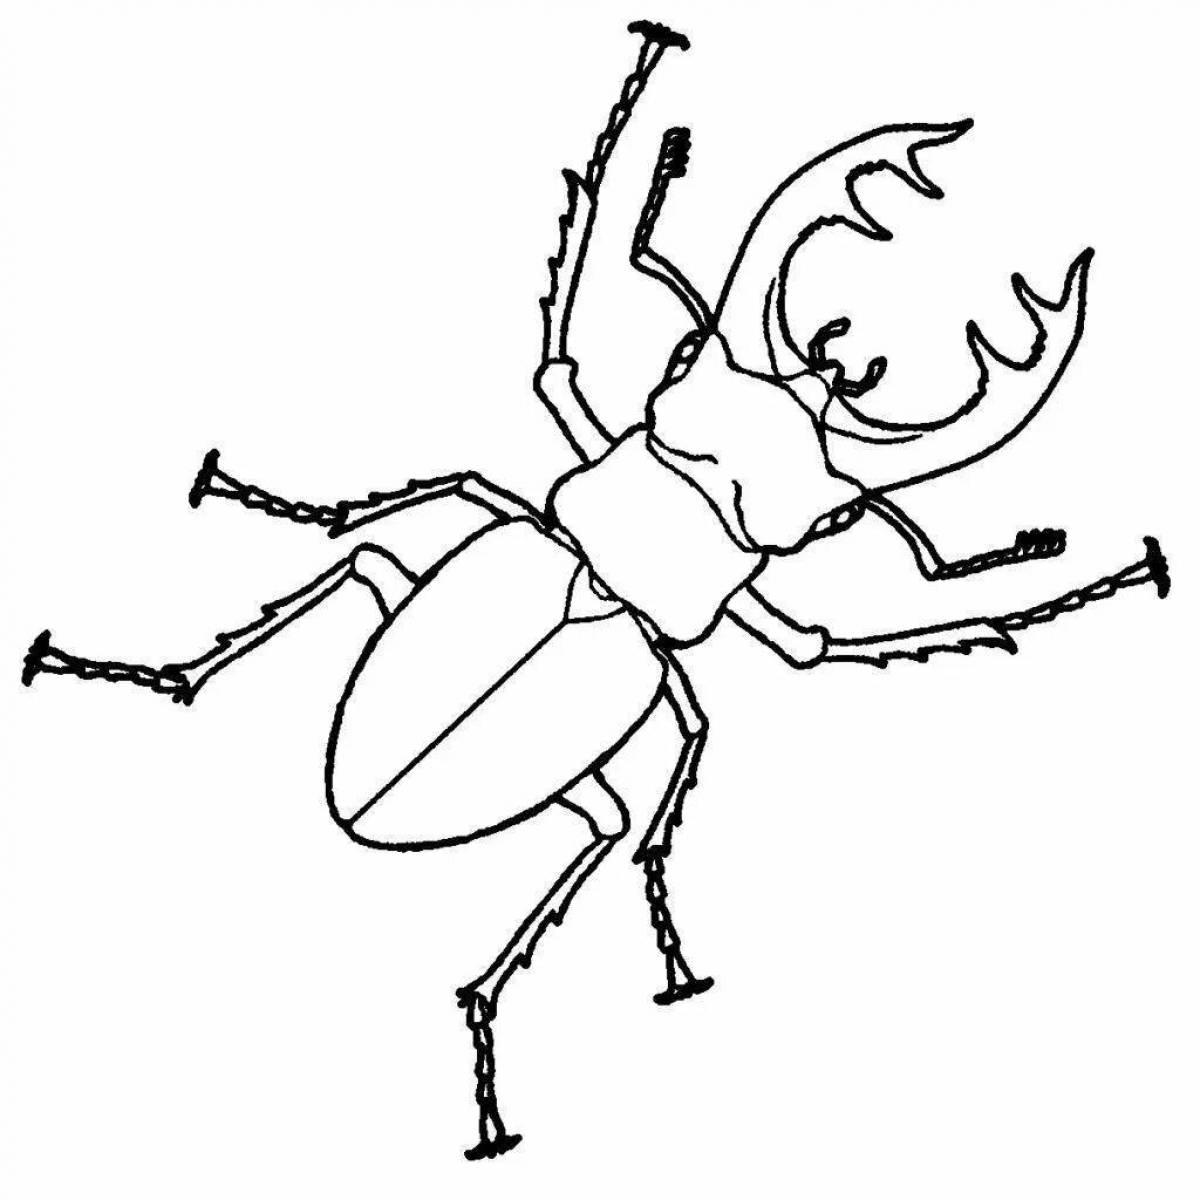 Stag beetle #10